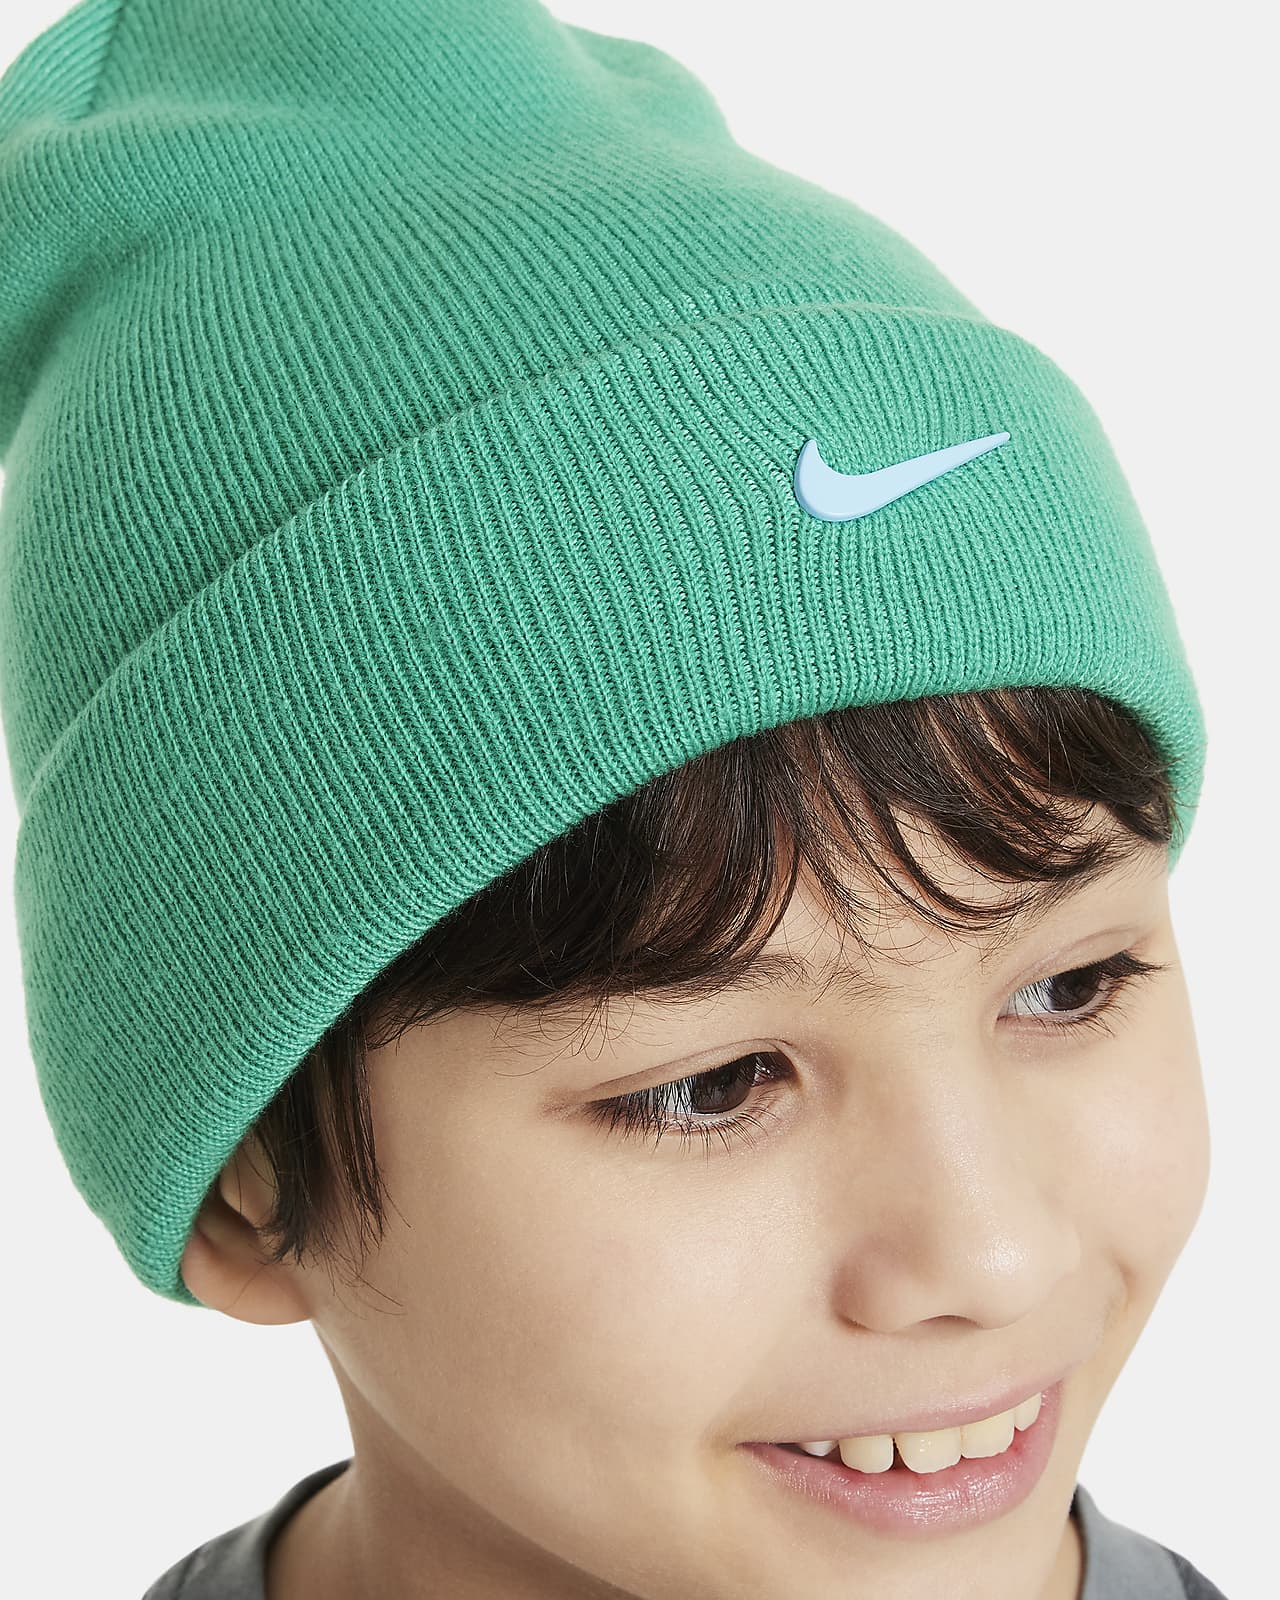 Bonnet Swoosh Nike Peak pour enfant. Nike LU